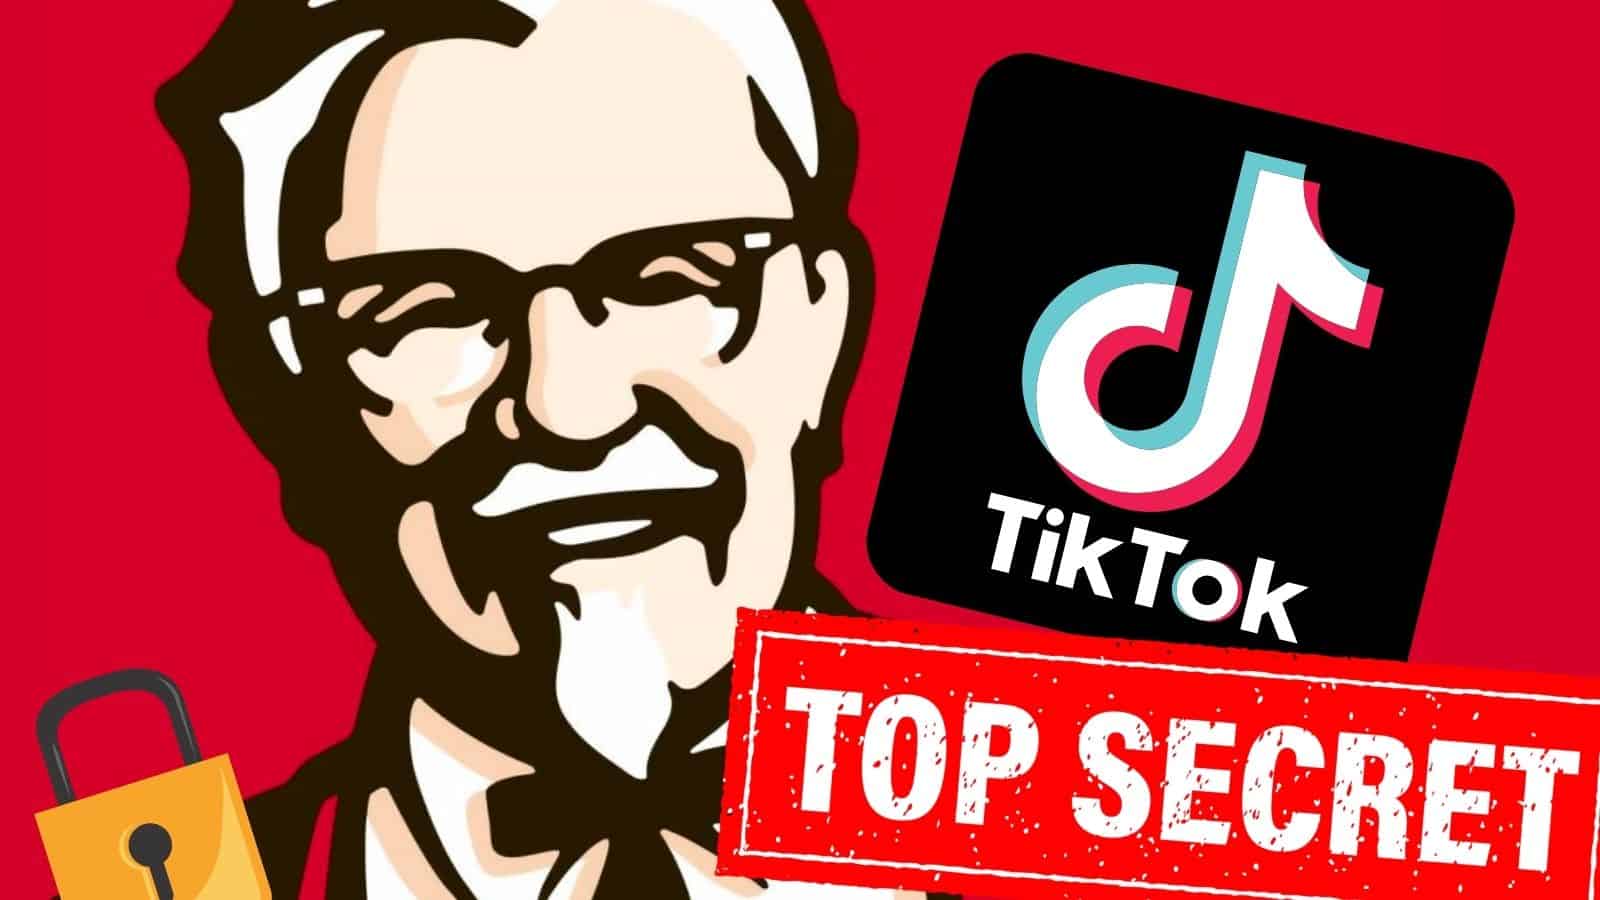 kfc man with secret menu and tiktok logo